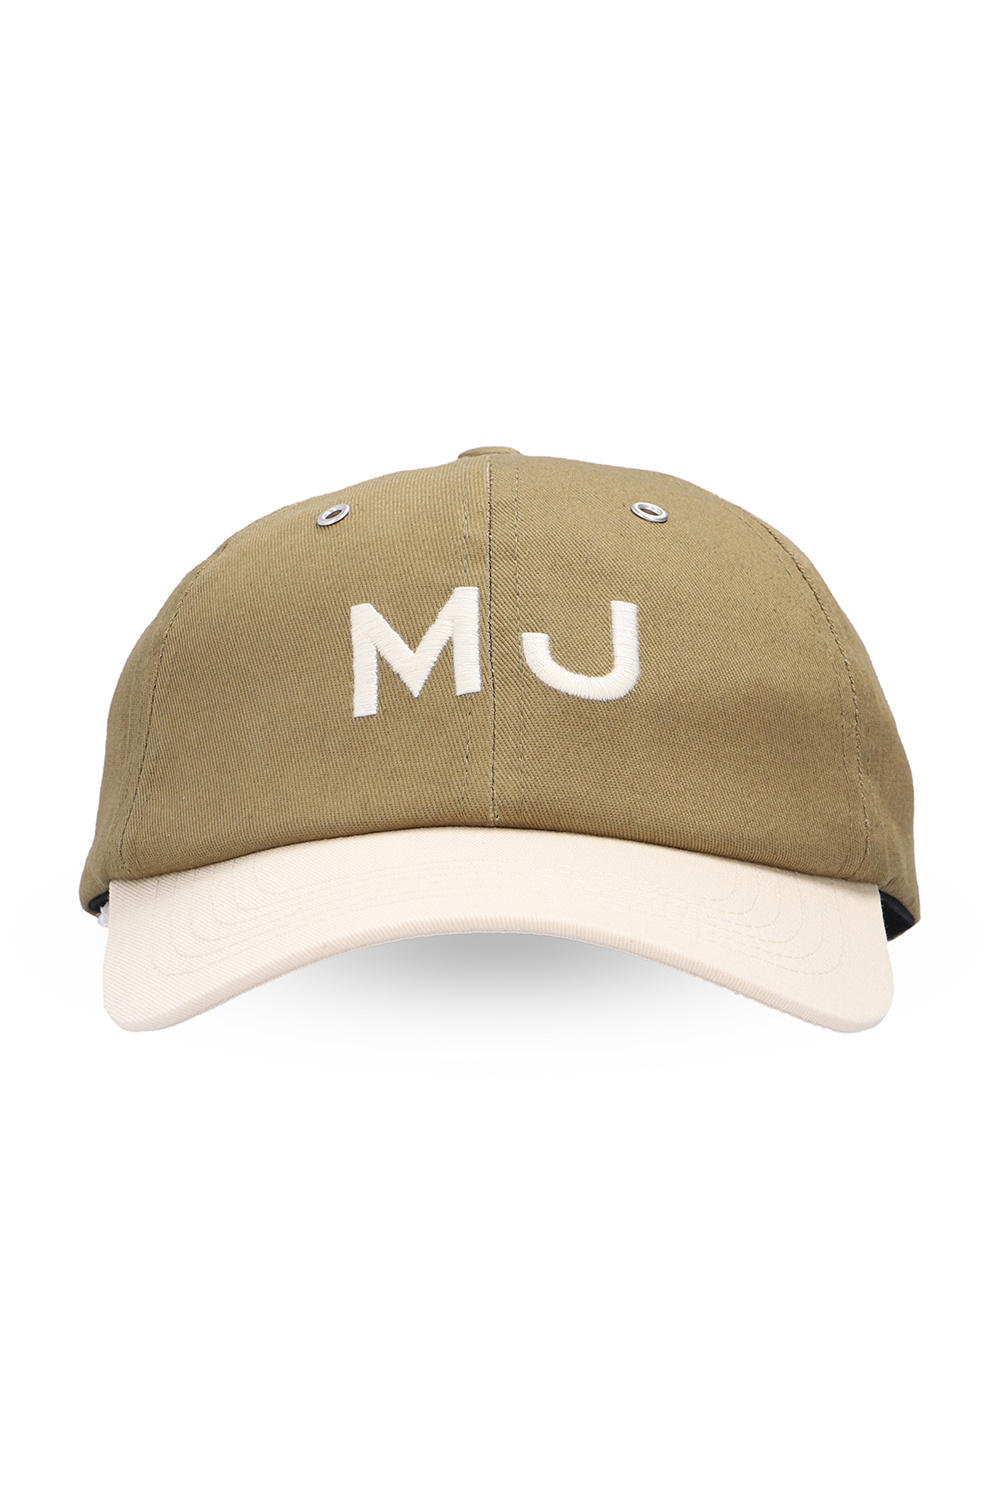 Marc Jacobs Baseball cap with logo